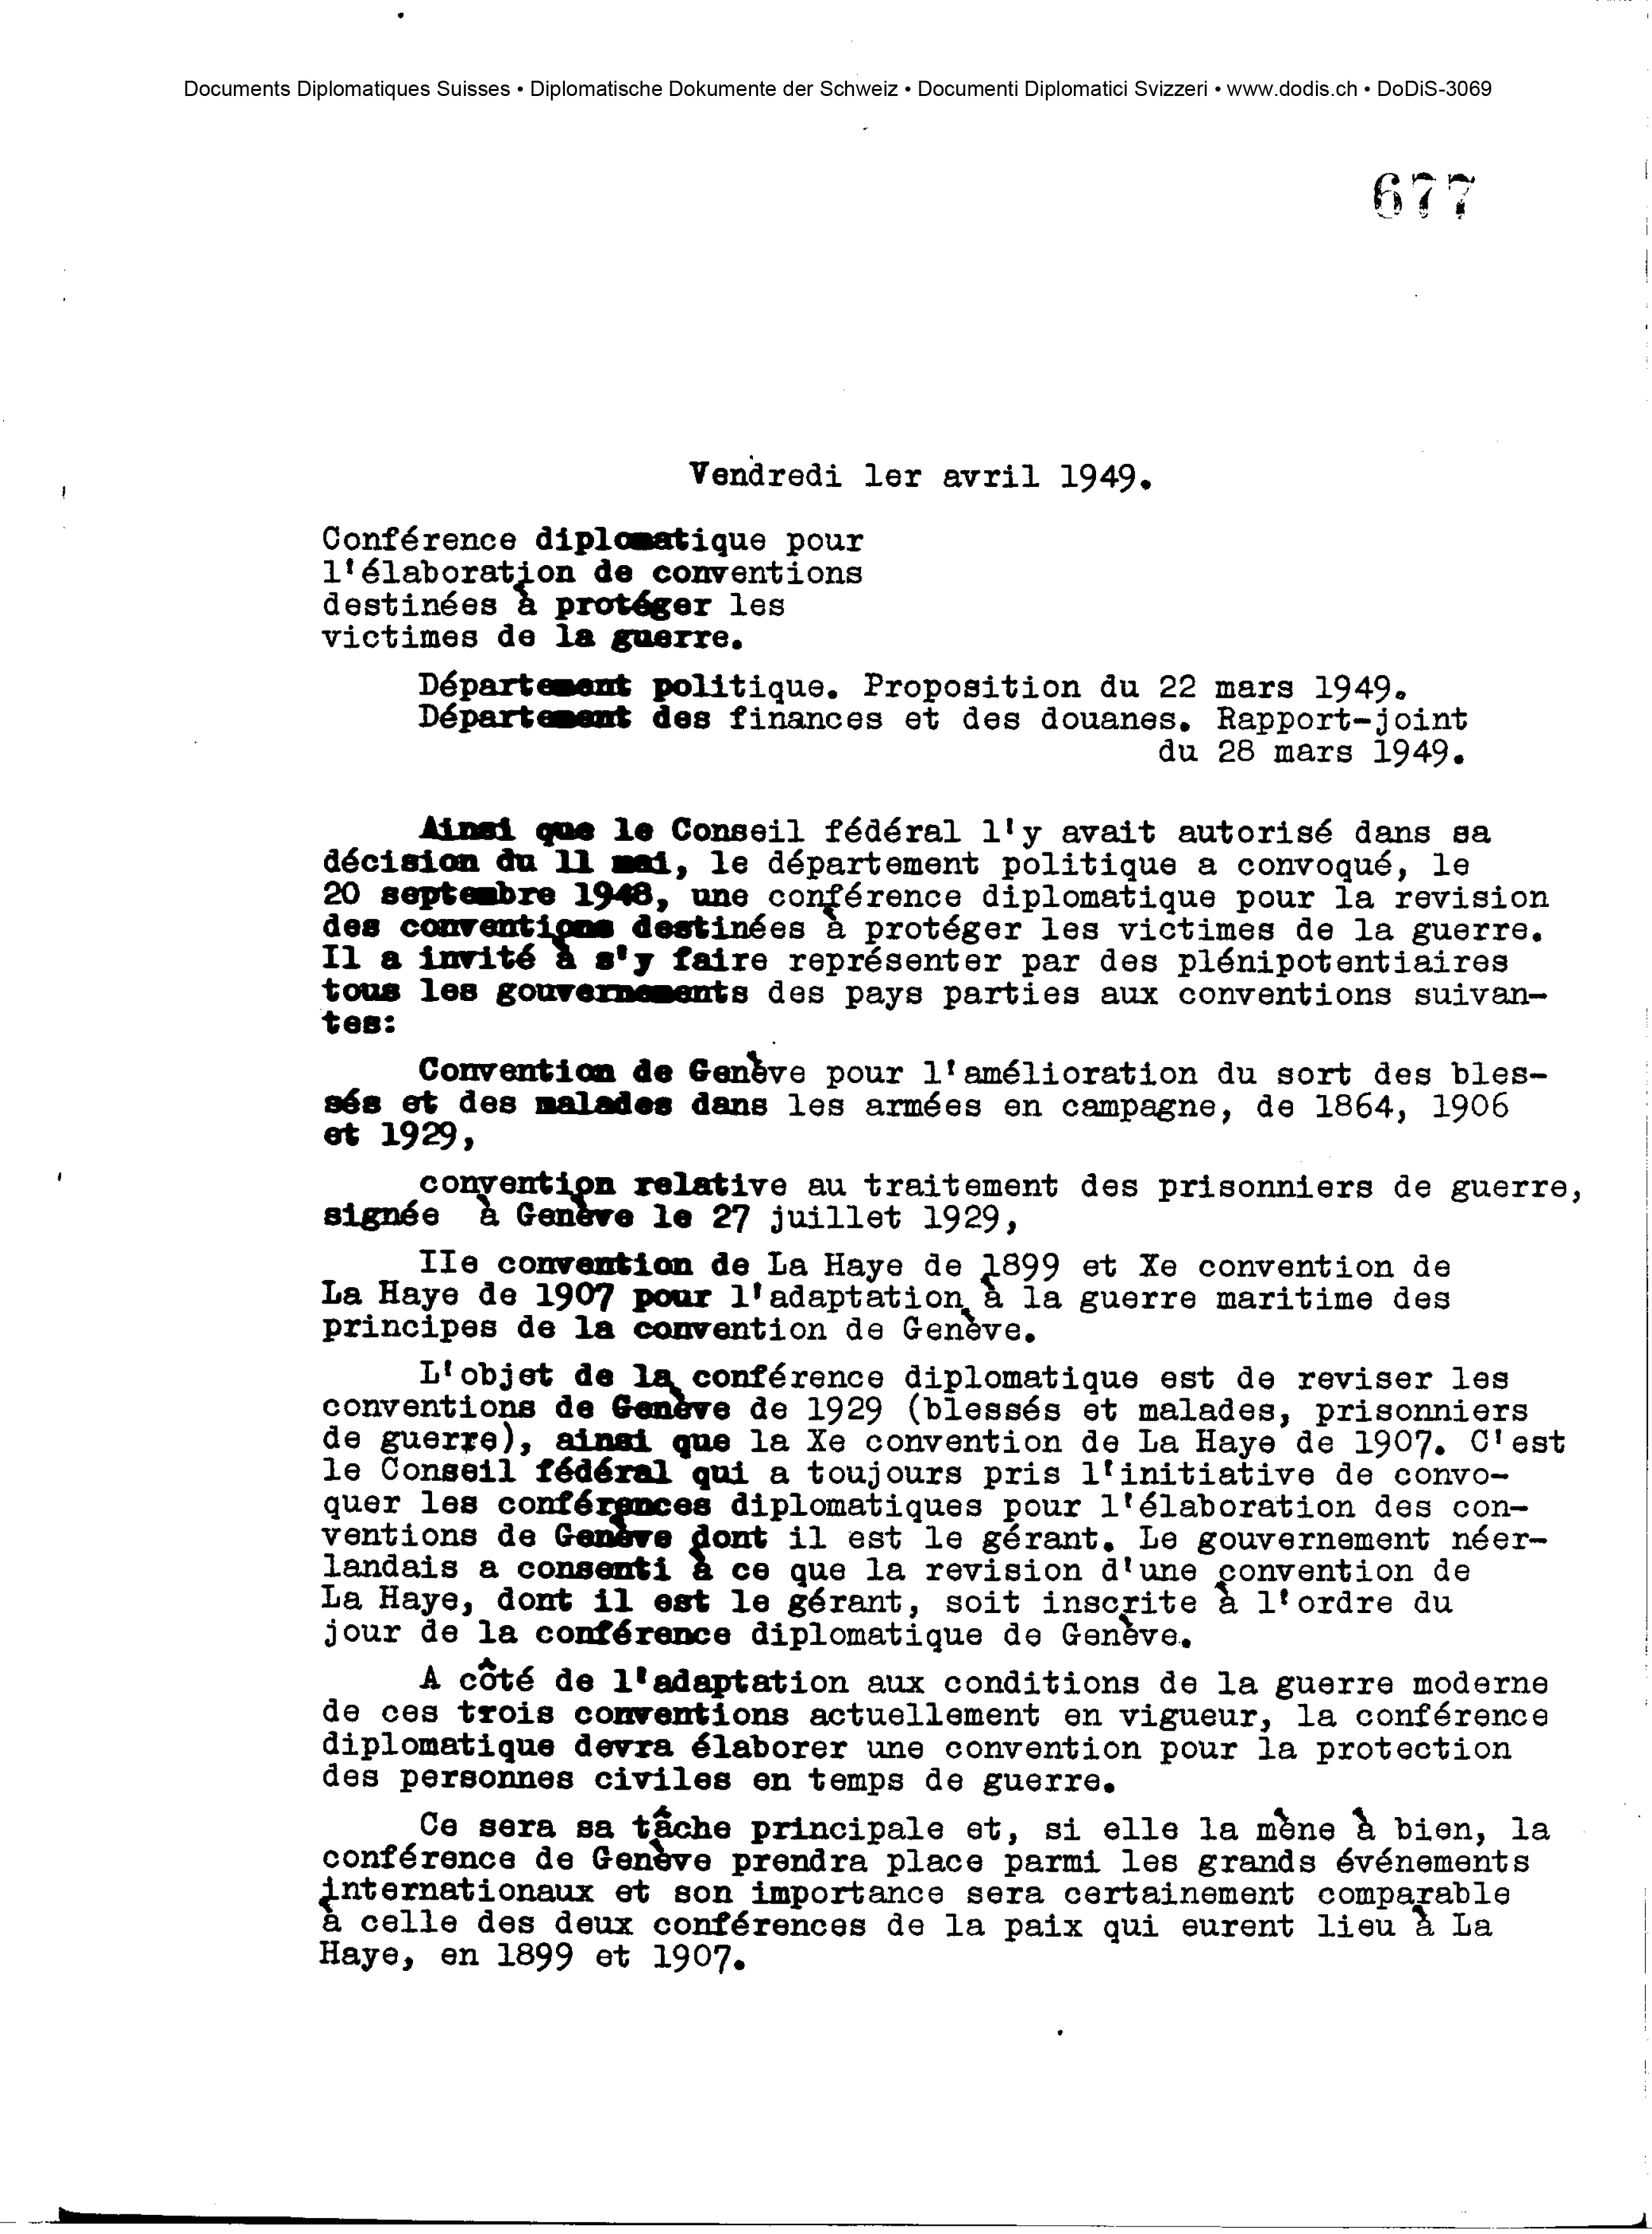 Beschluss des Bundesrats vom 1. April 1949 